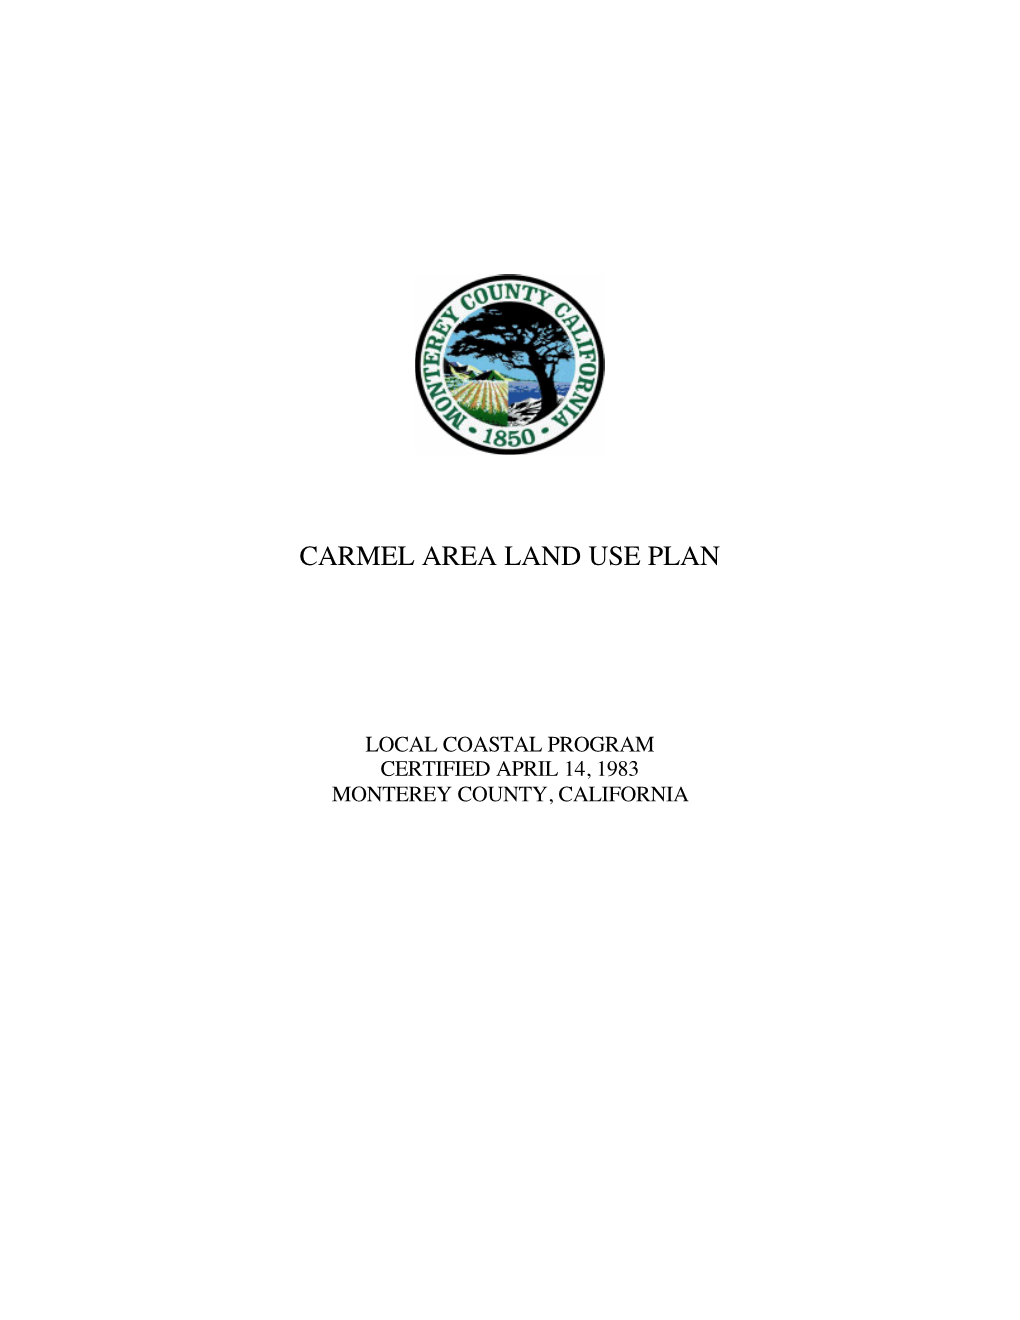 Carmel Area Land Use Plan